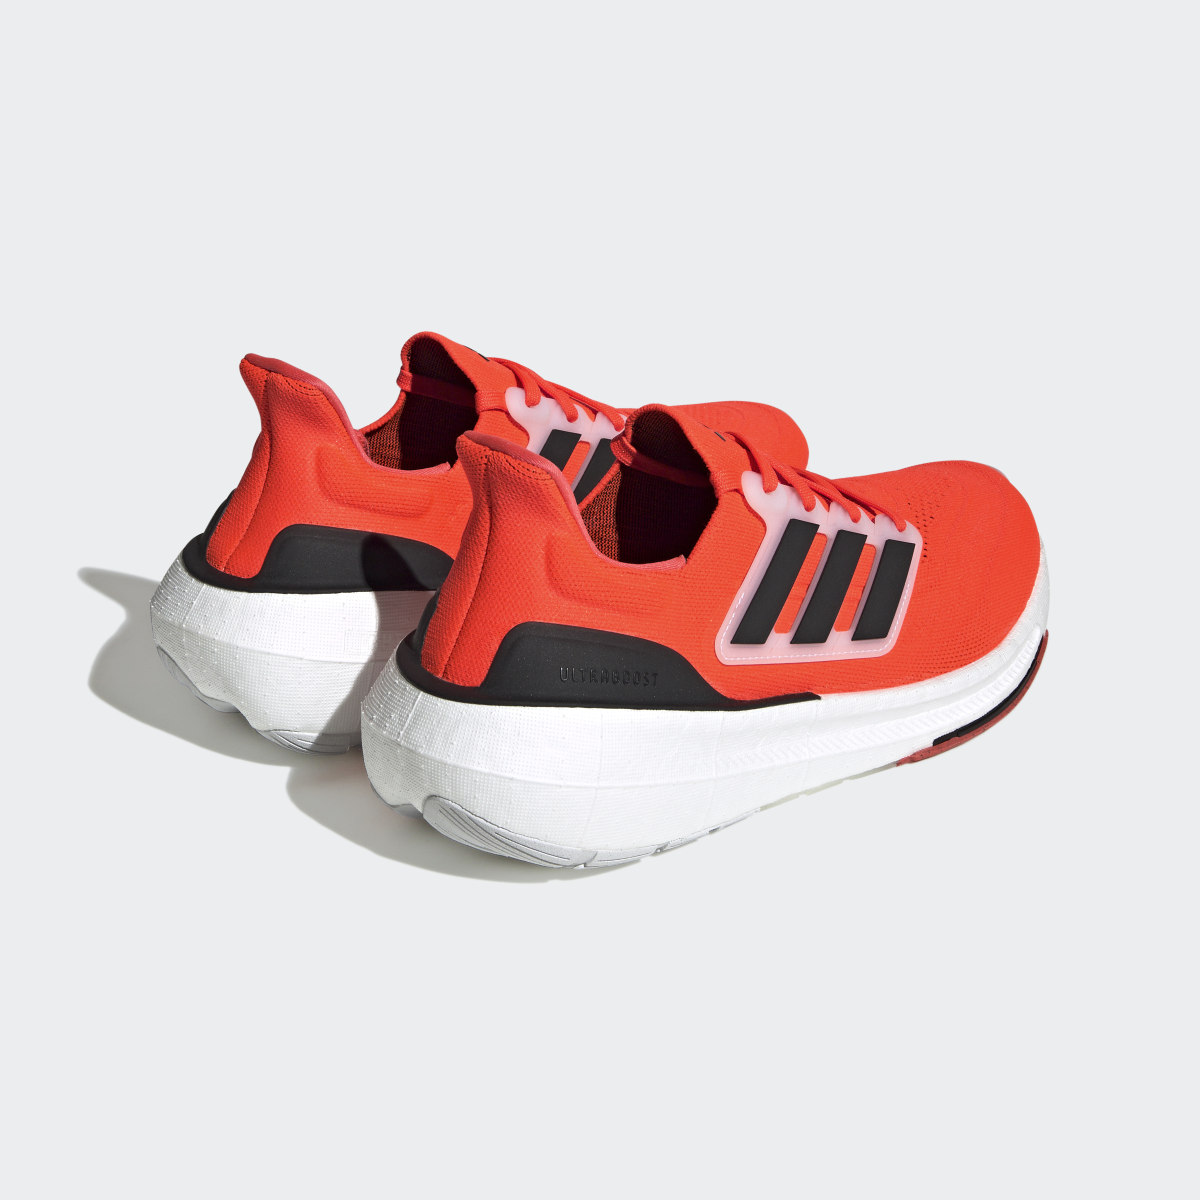 Adidas Ultraboost Light Shoes. 6